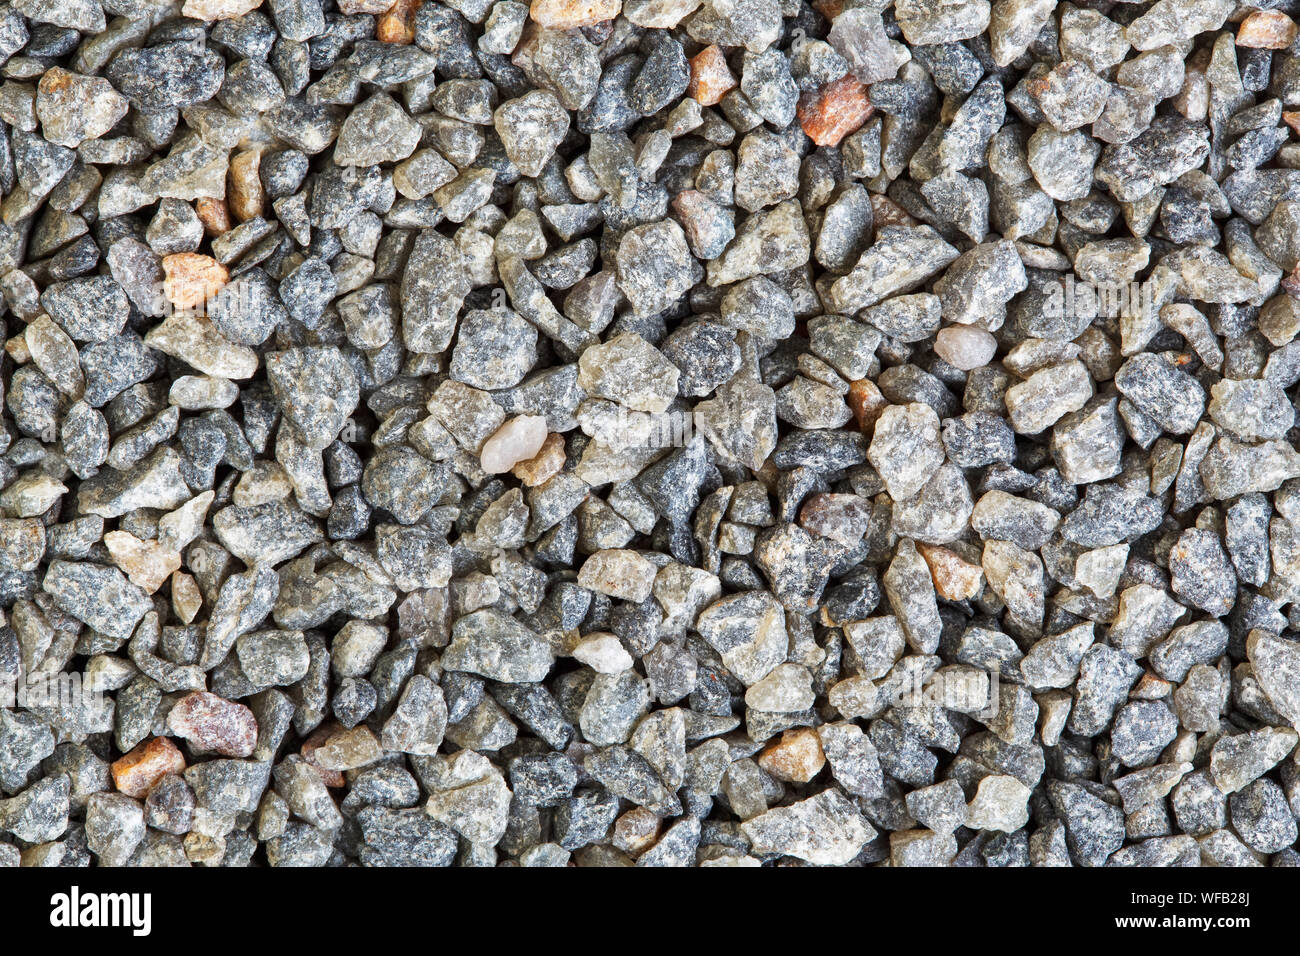 Colorful gravel background texture. Close-up shot of quartz stones on macro. Stock Photo